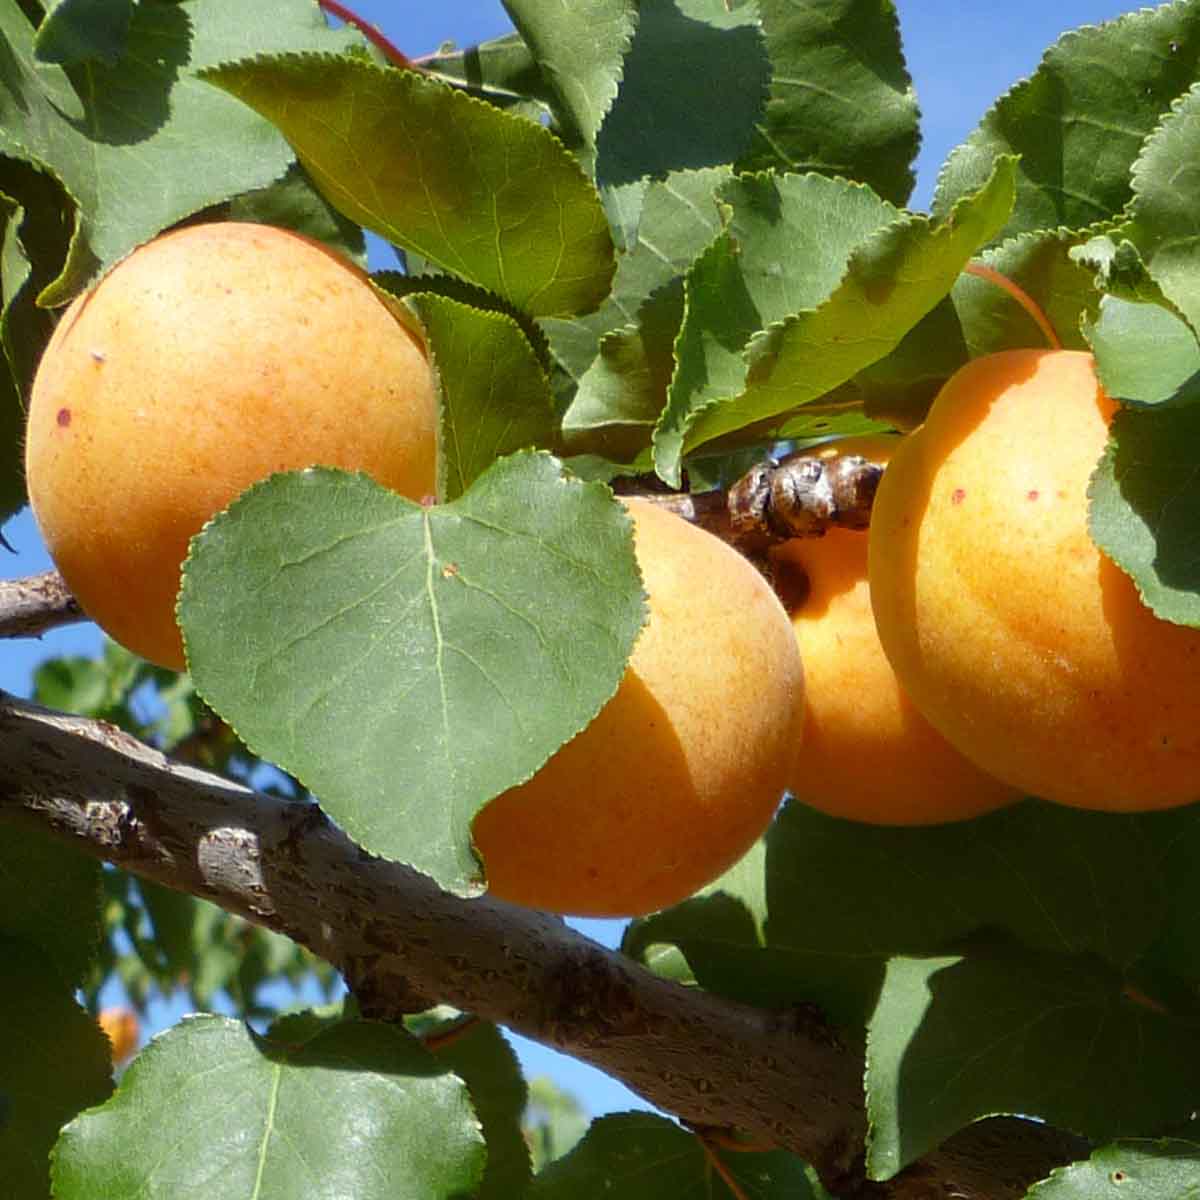 An apricot tree